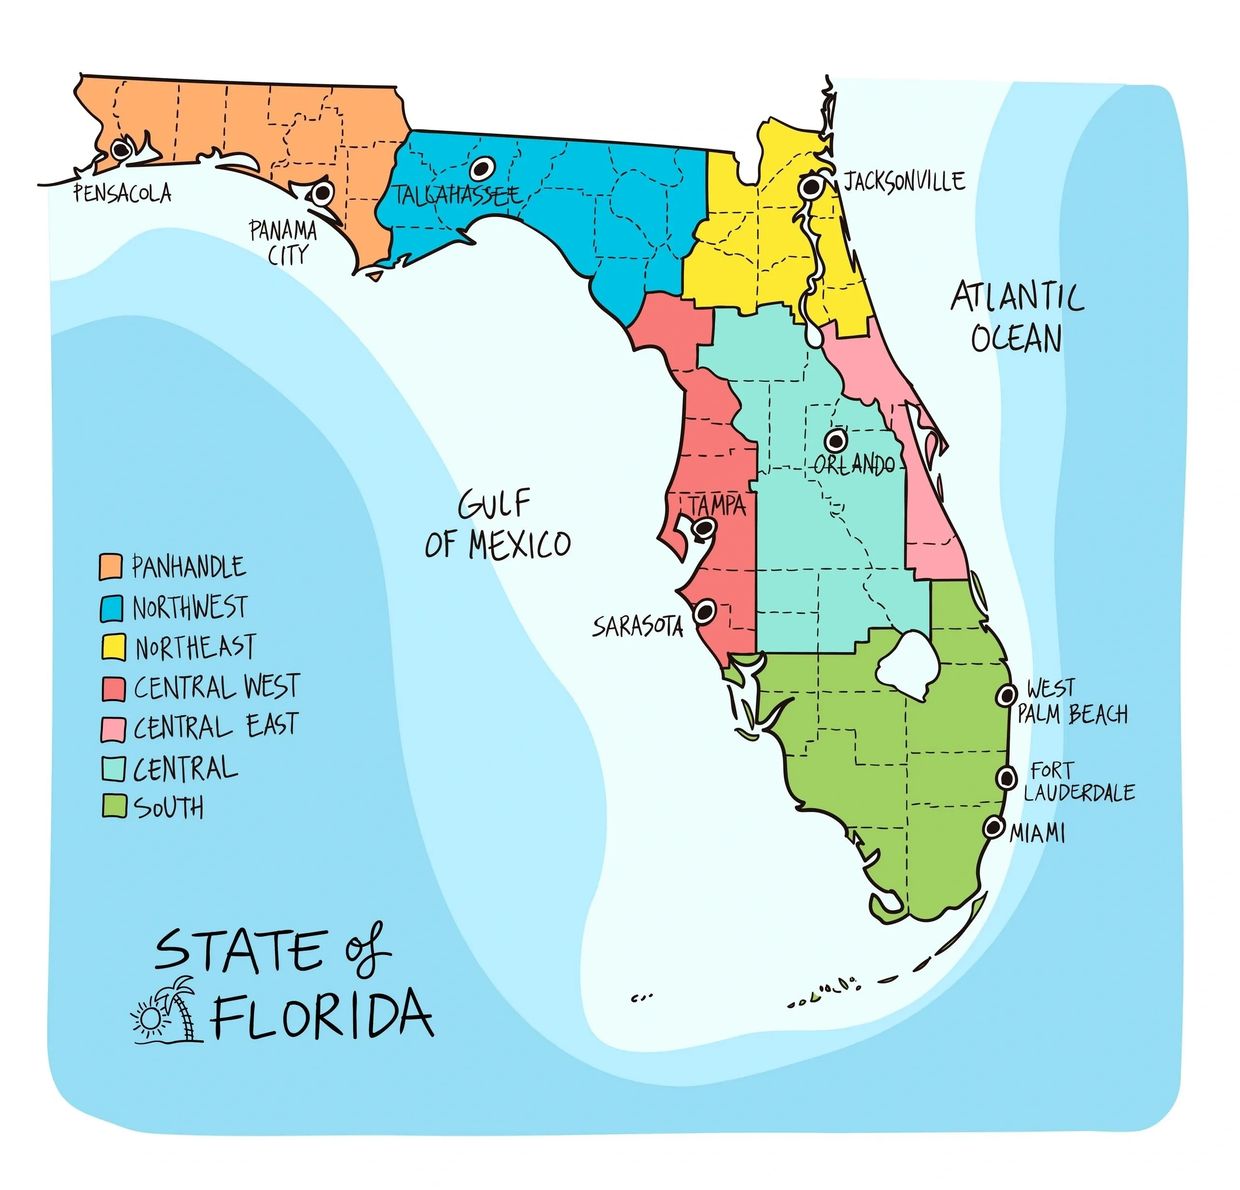 Florida Telehealth Counties: Central Florida, Tampa Bay, Space Coast, Panhandle, South Florida